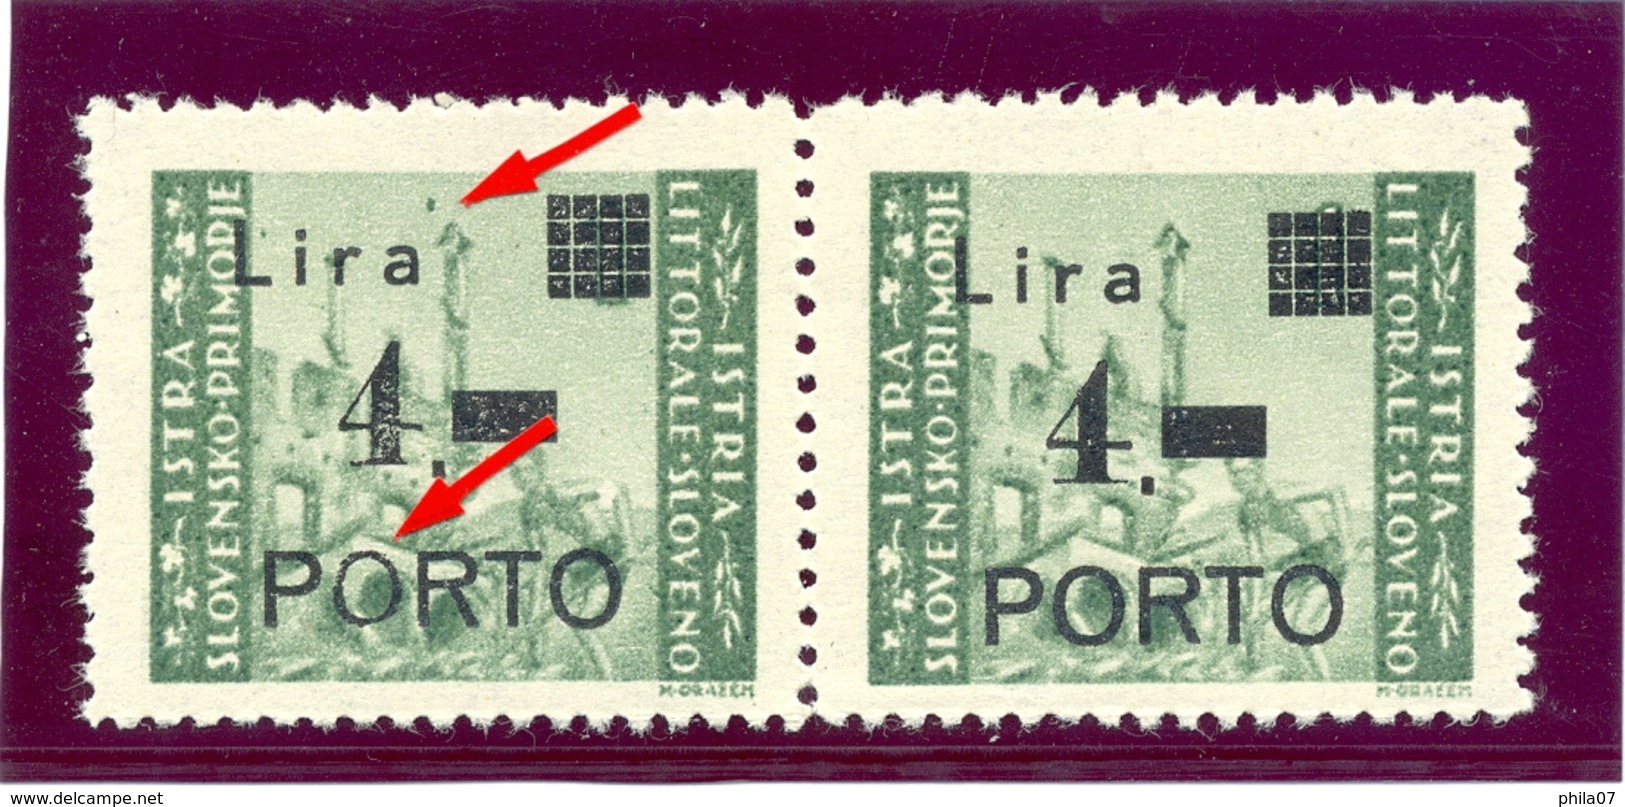 Italy, Yugoslavia - PS No. 10, Type Ia And Error Of Overprint, Thin O In PORTO And Dot Above Tower, Novakovic. - Occup. Iugoslava: Litorale Sloveno